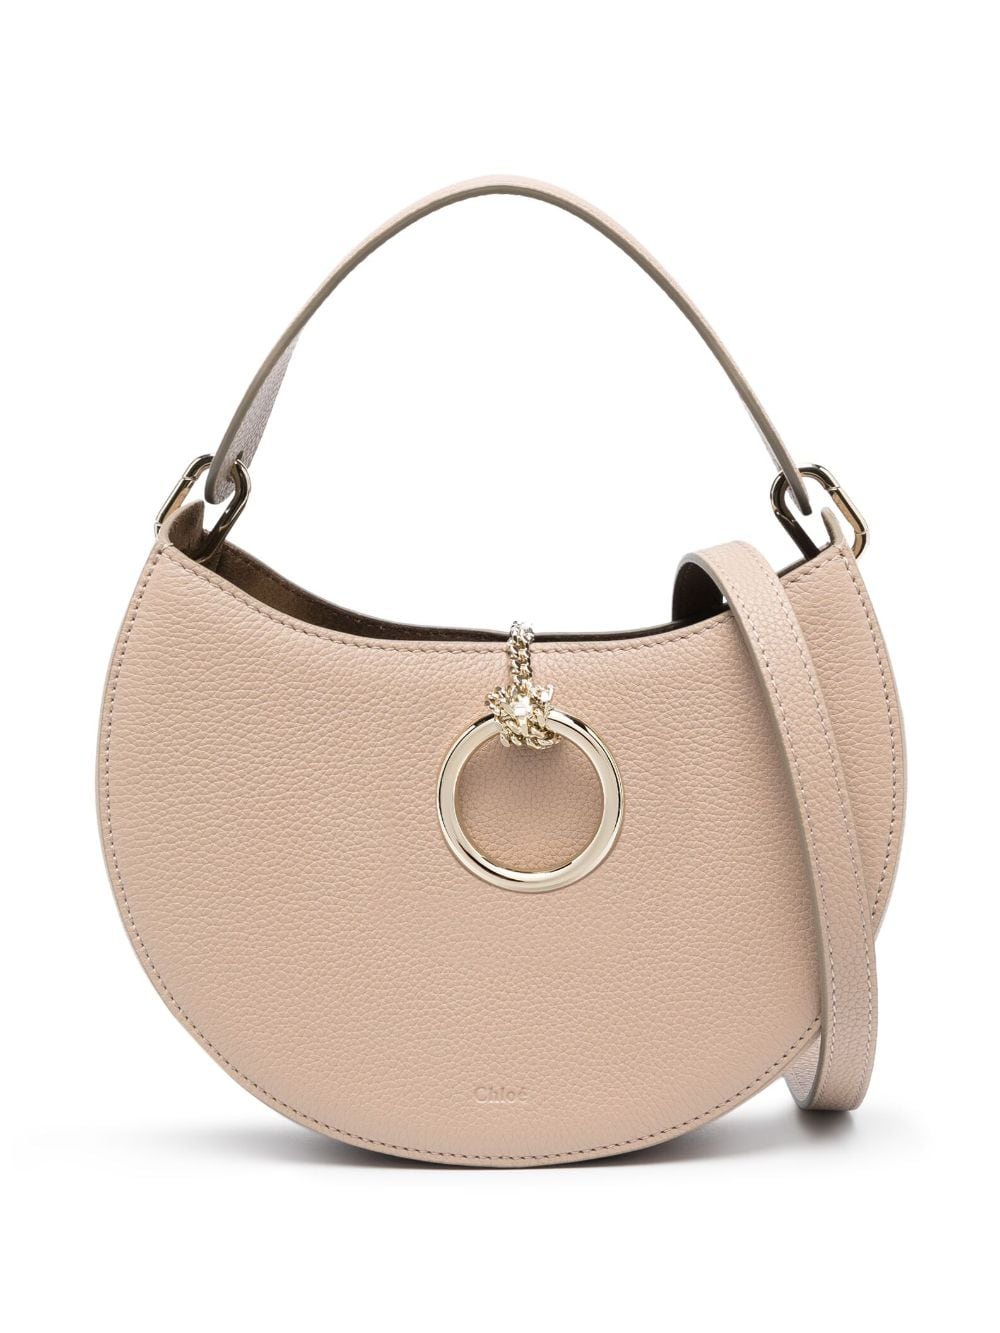 Luxury Tan Leather Crossbody Handbag for Women - ARLENE RING-DETAIL Tote Handbag by CHLOÉ